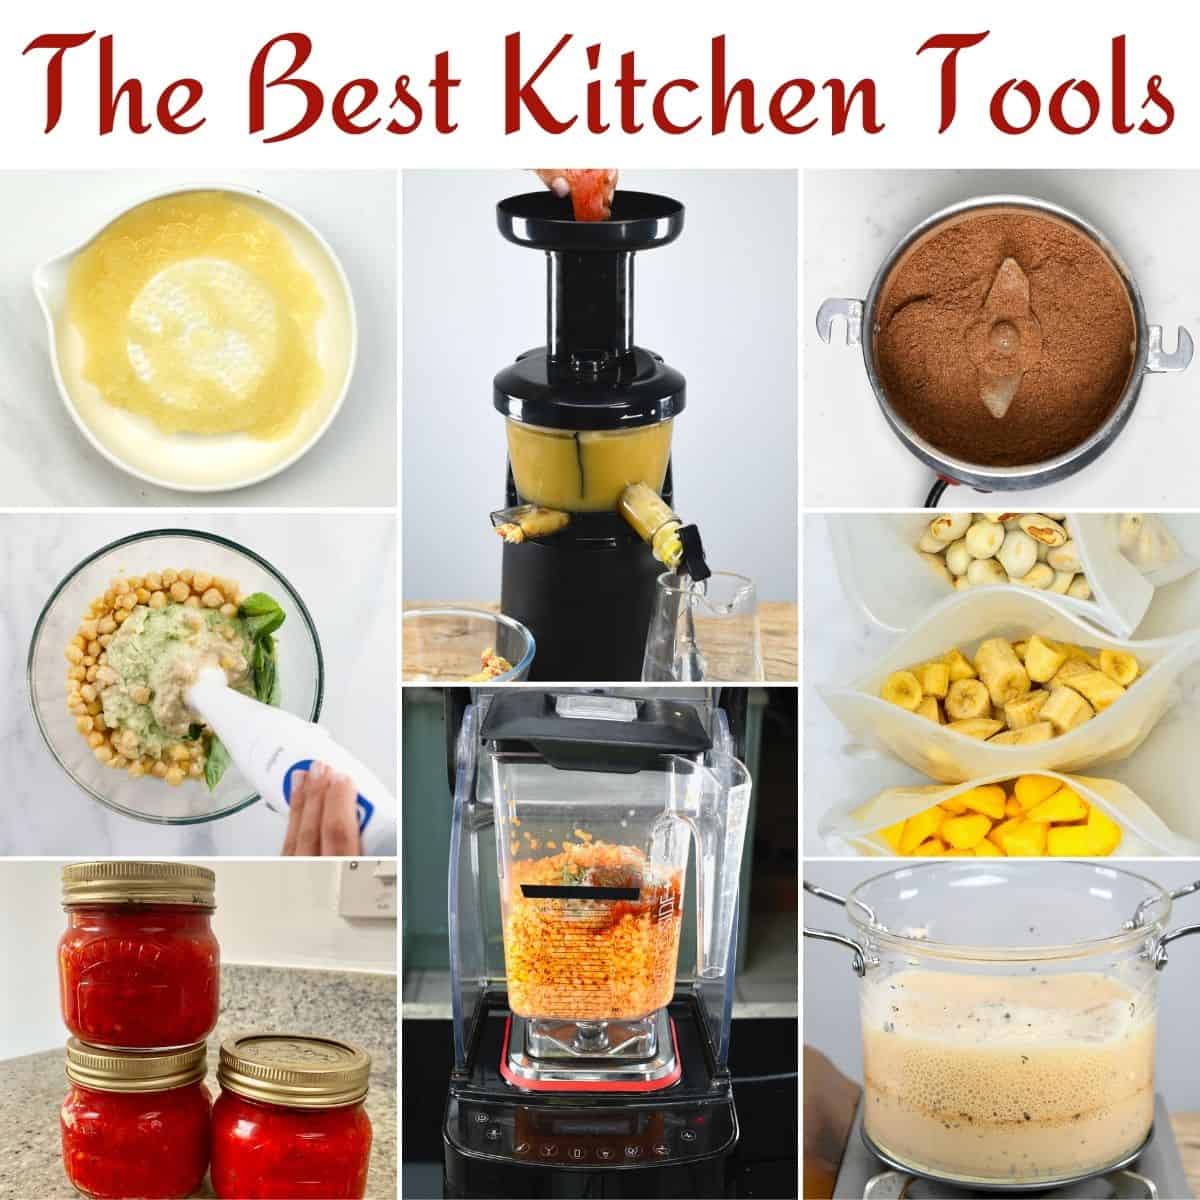 https://www.alphafoodie.com/wp-content/uploads/2021/11/Best-Kitchen-Tools-Square.jpg